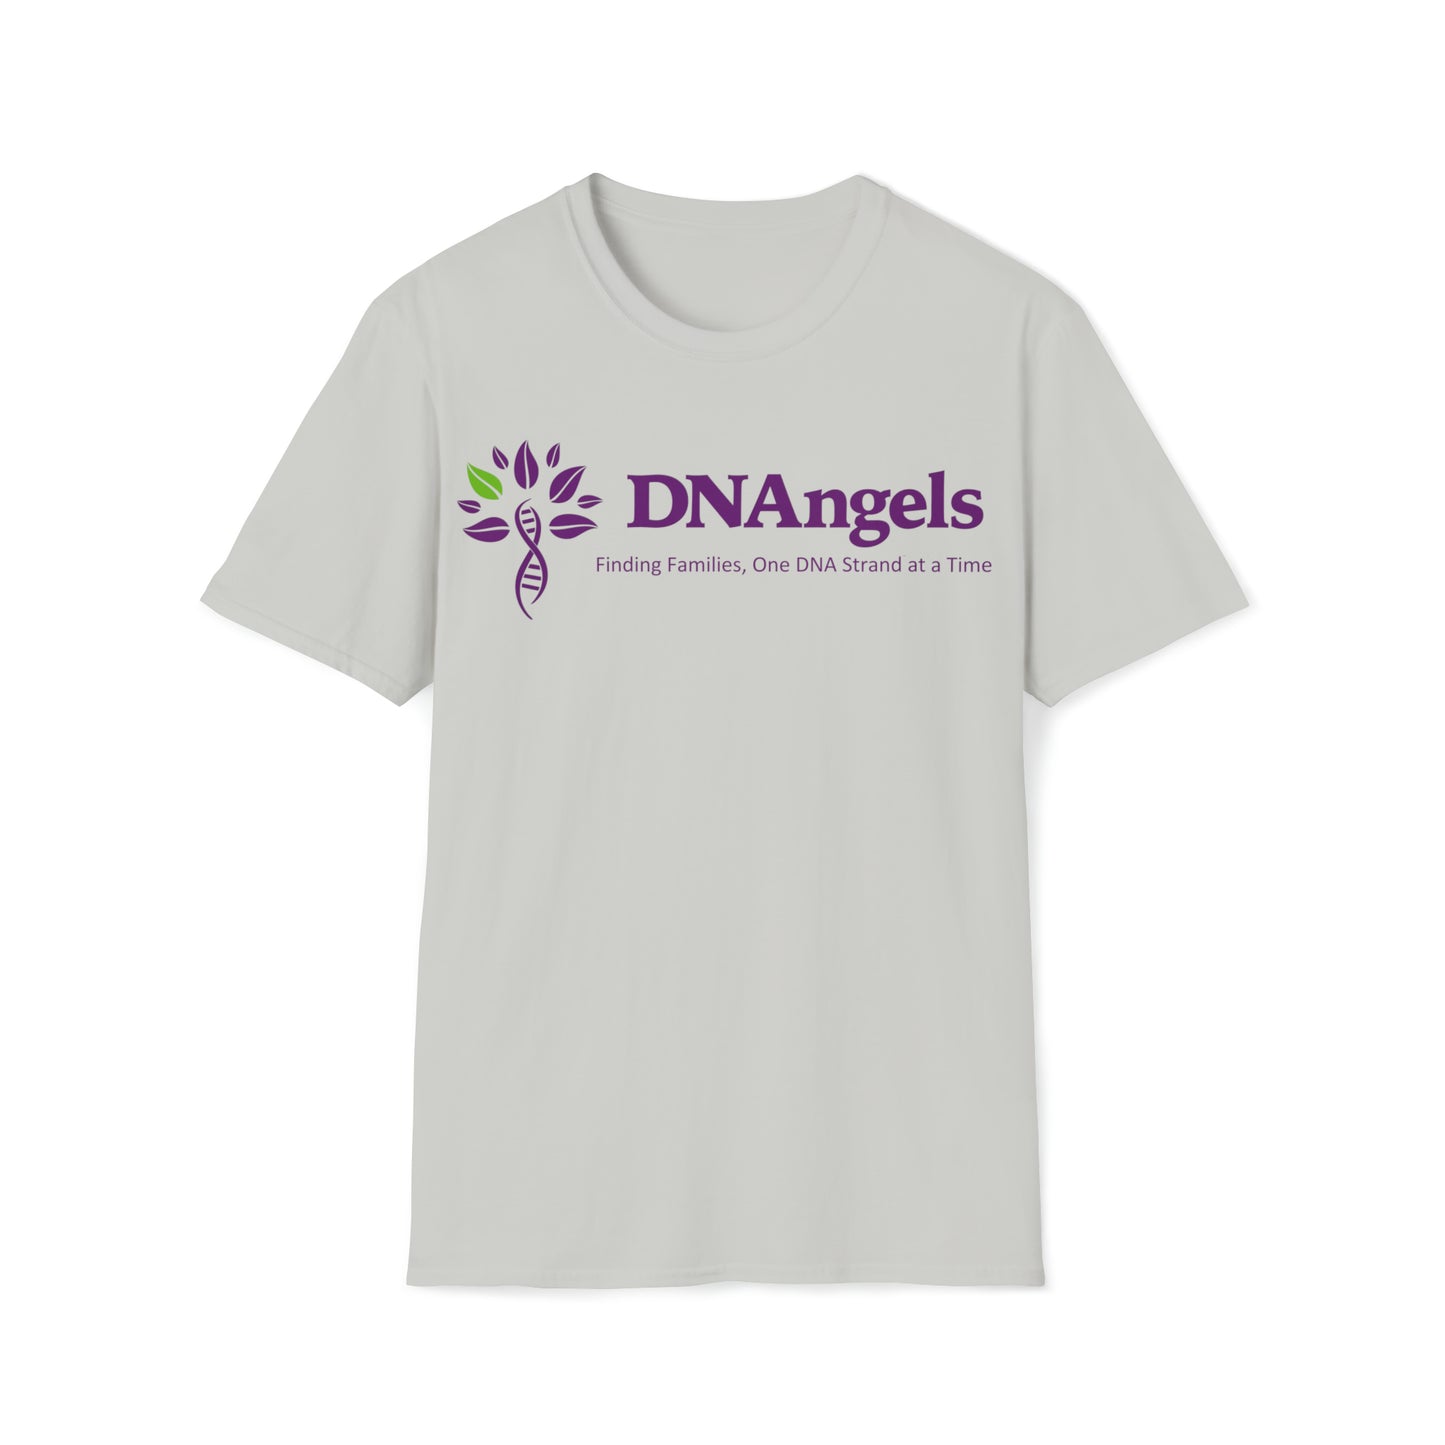 DNAngels T-Shirt with Tagline